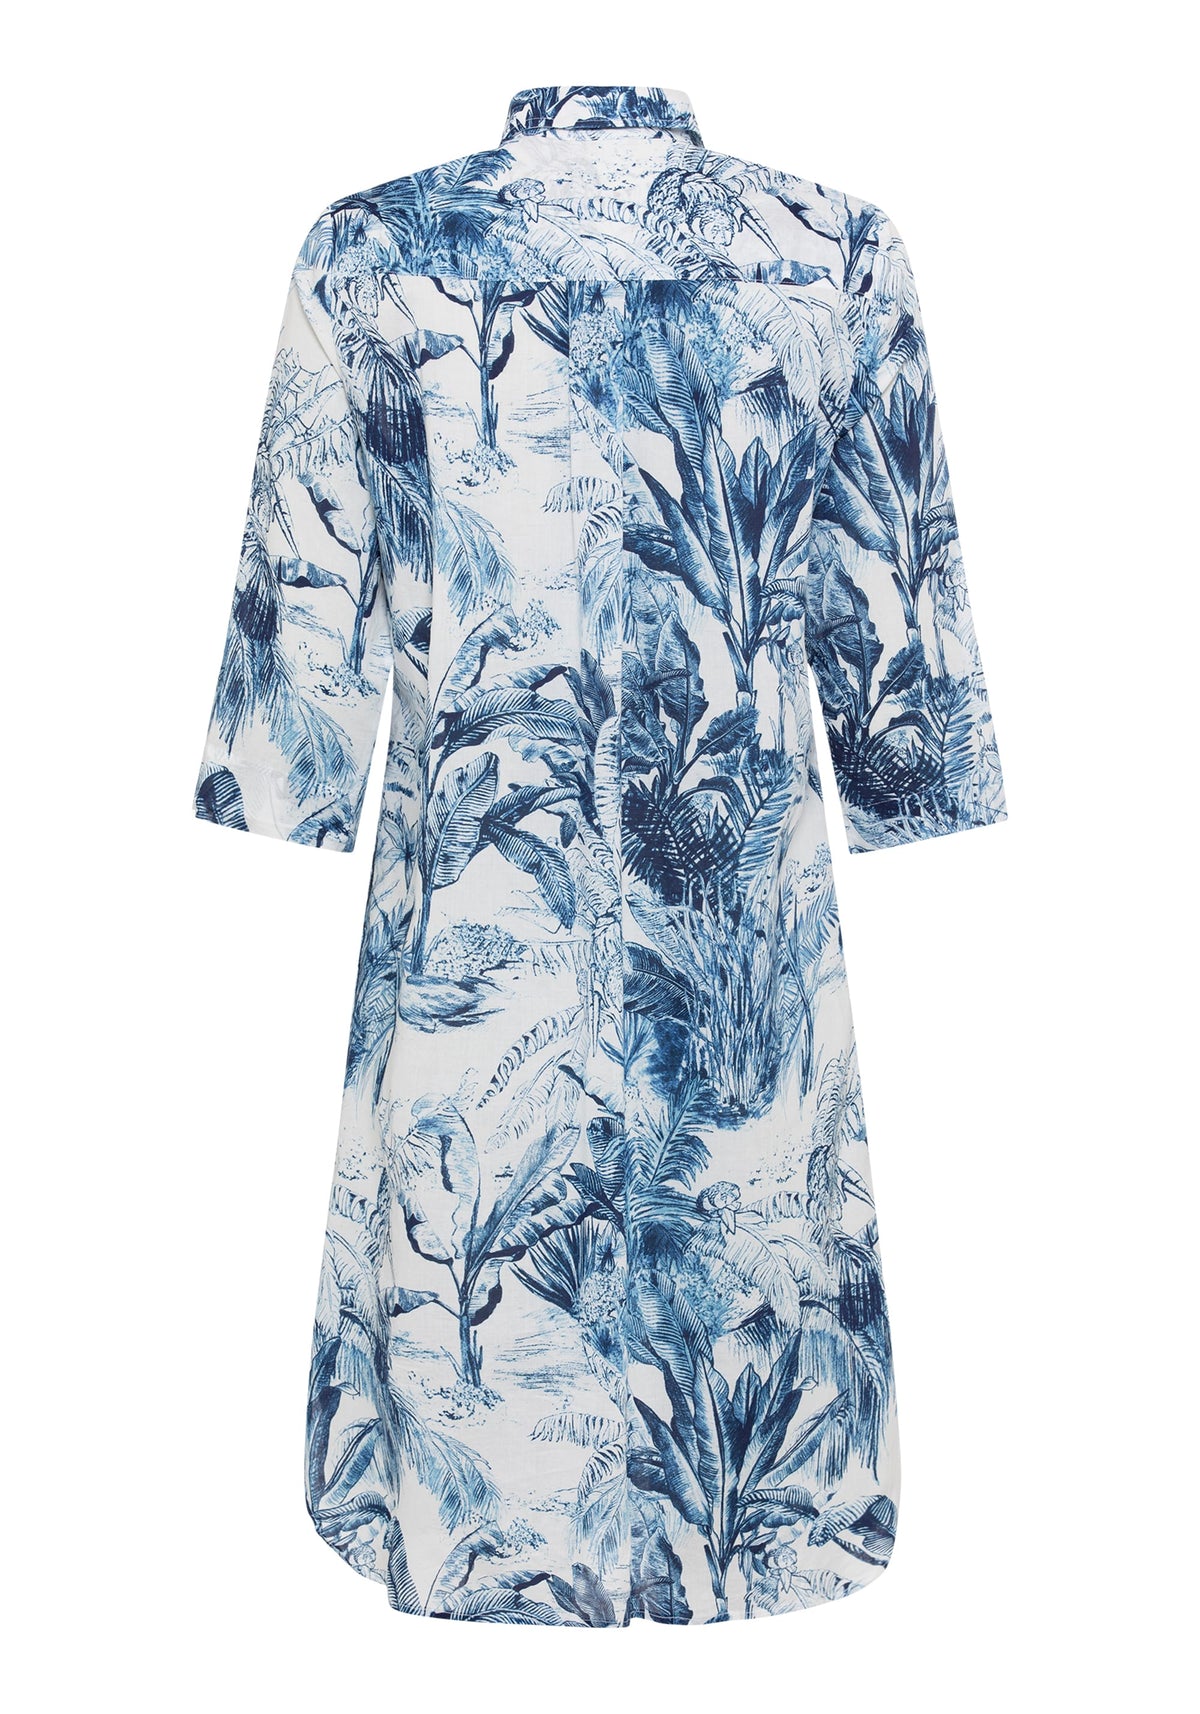 100% Cotton 3/4 Sleeve Tropic Leaf Print Dress